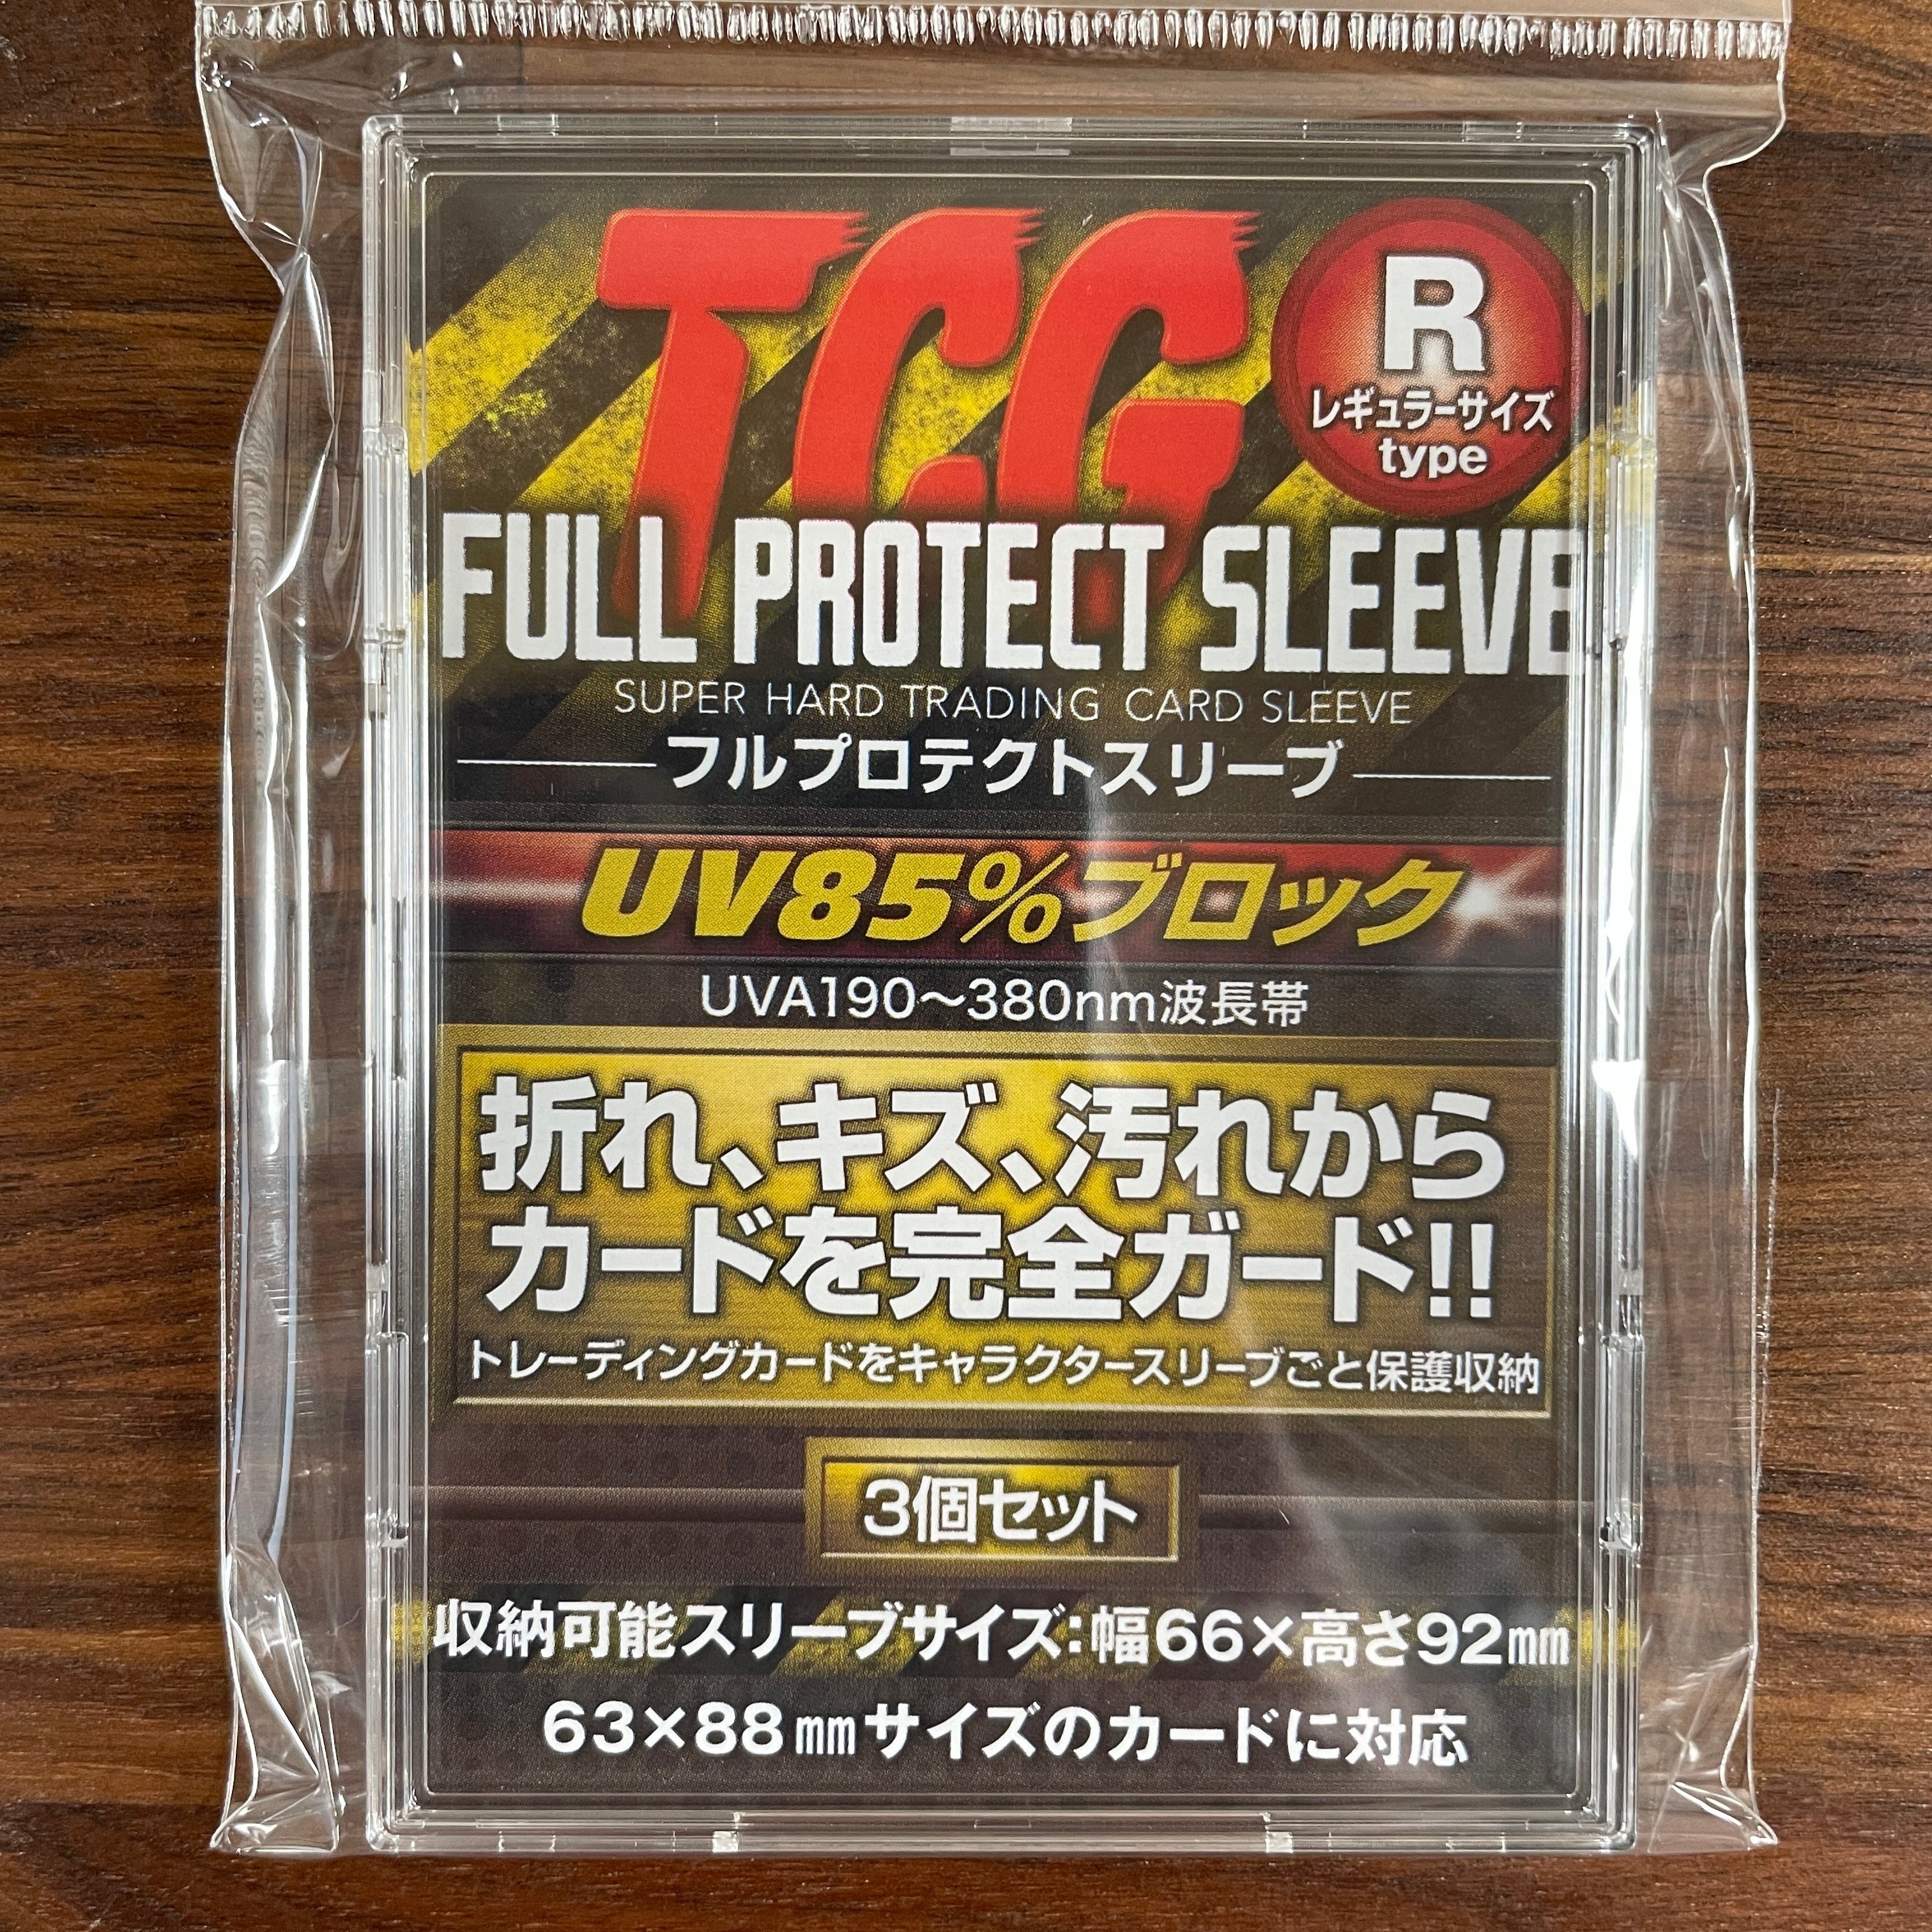 FULL PROTECT SLEEVE SUPER HARD TRADING CARD SLEEVE Regular size type (set of 3)